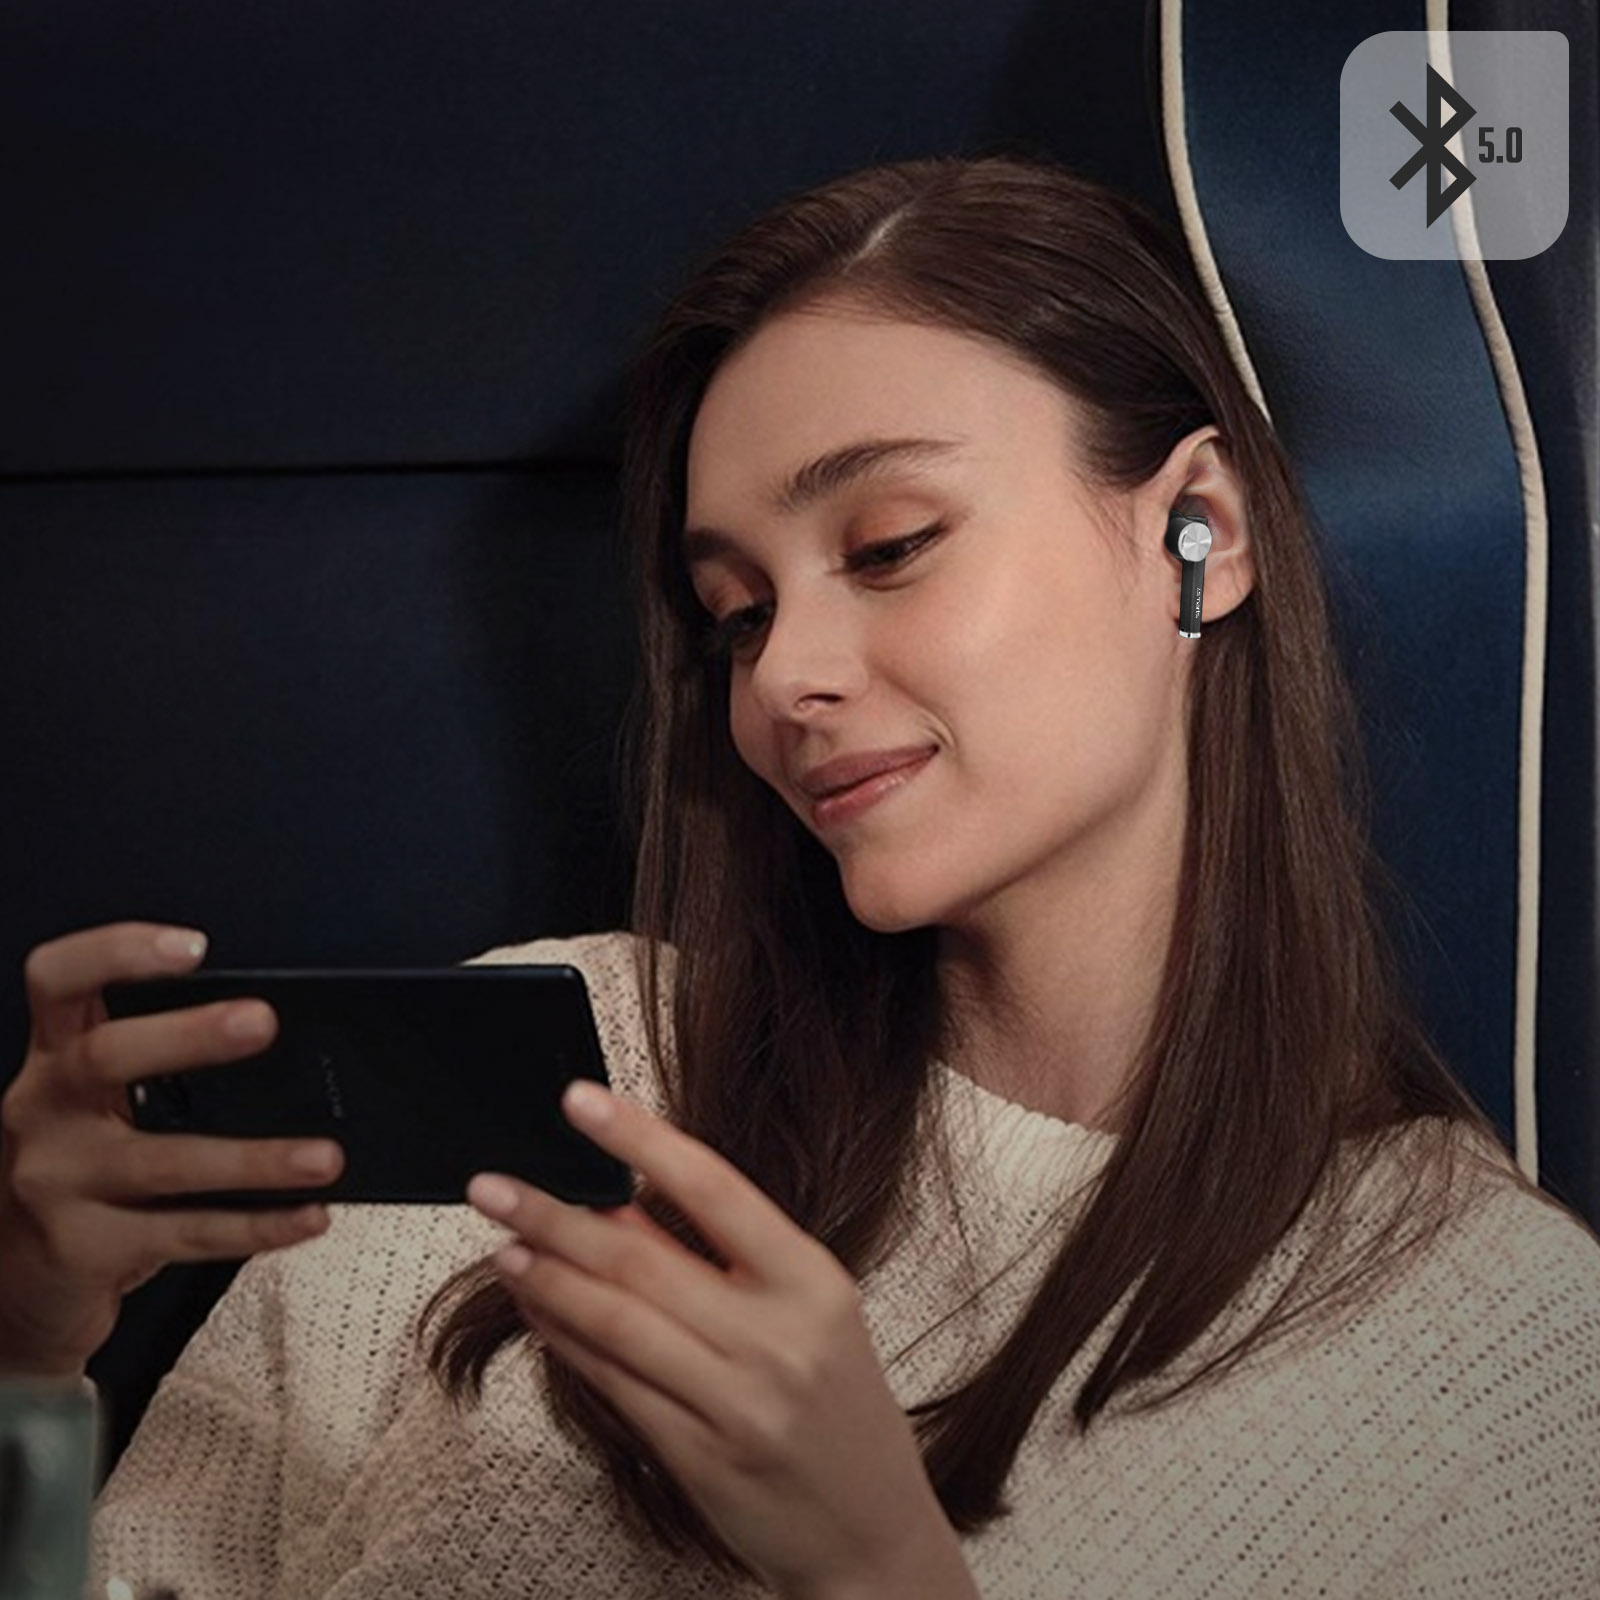 Auriculares Bluetooth Estuche De Carga 4smarts Pebble Series - Negro